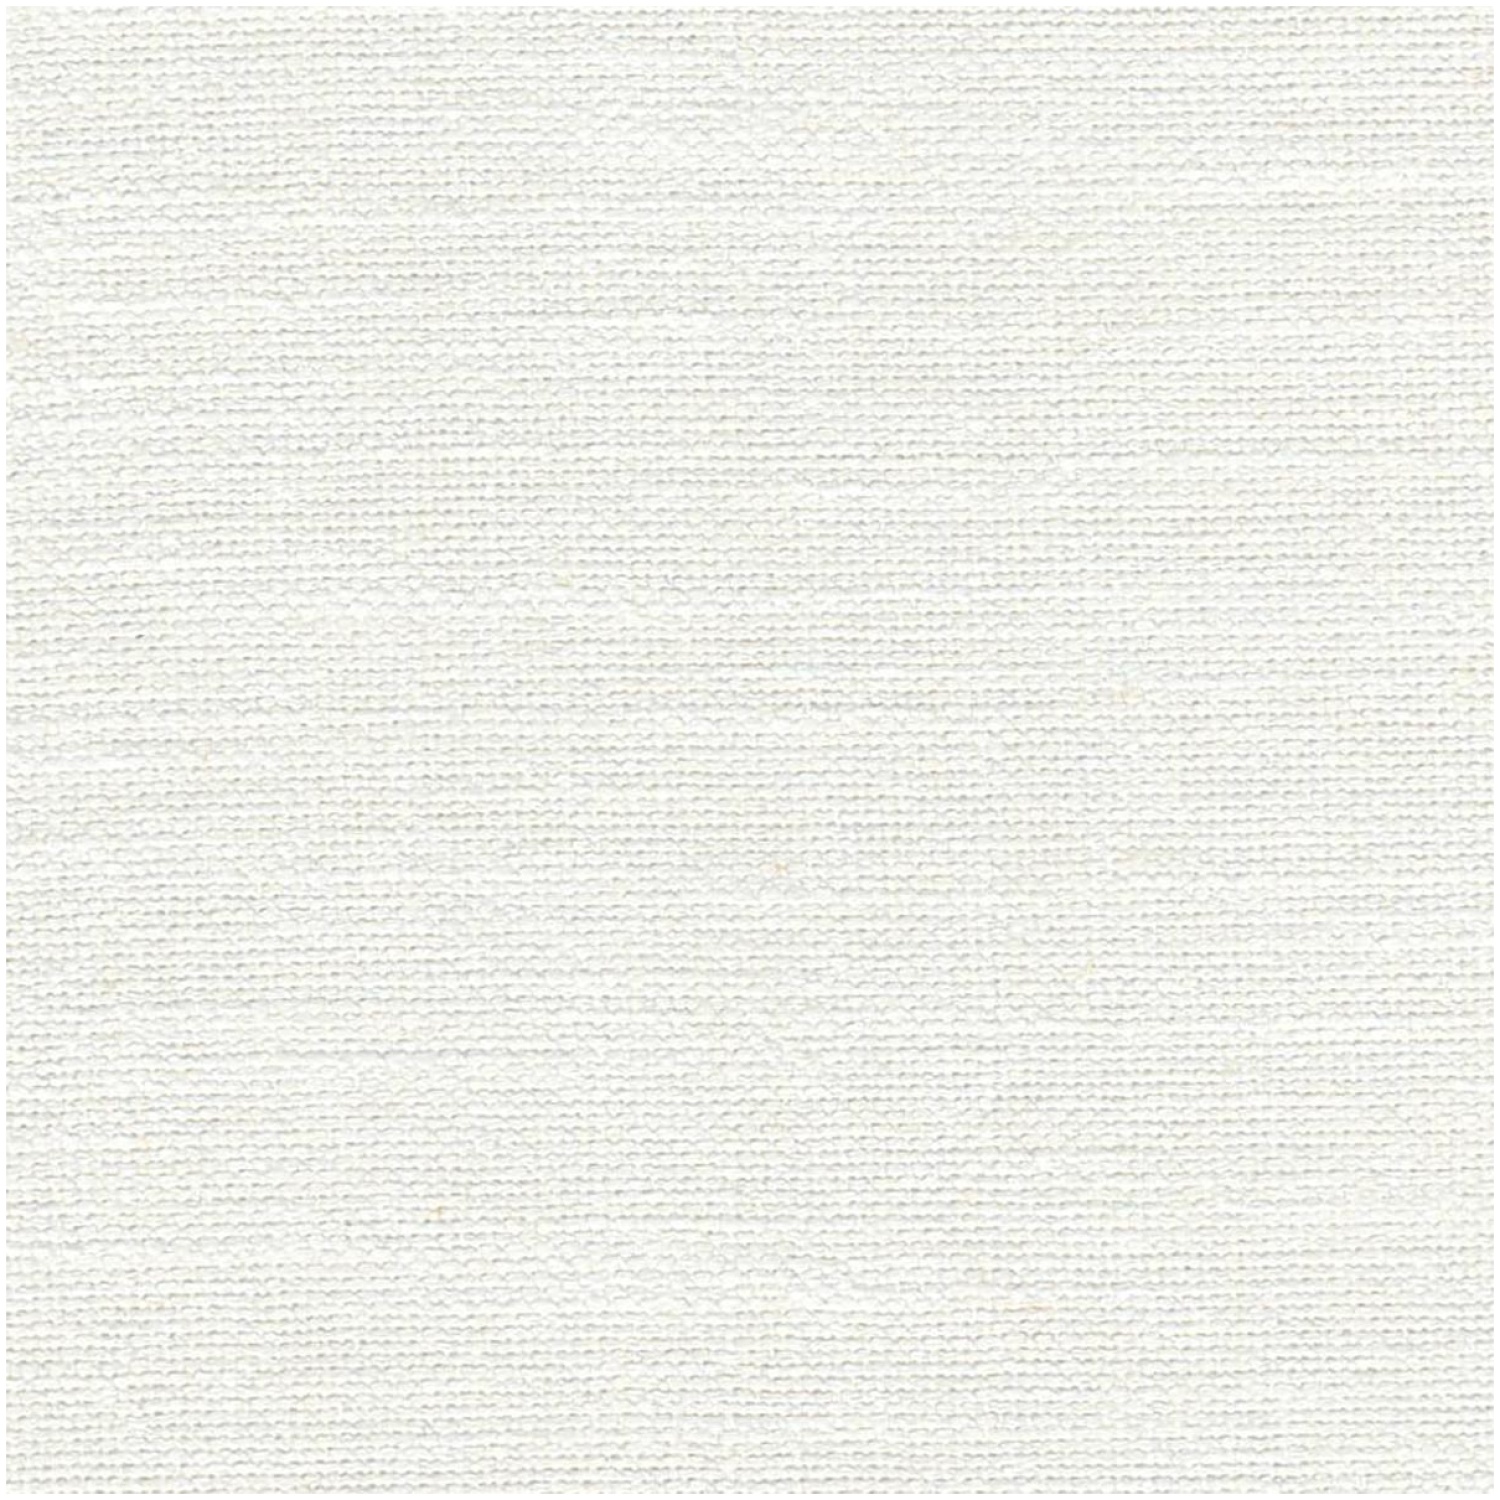 Lisann/White - Multi Purpose Fabric Suitable For Drapery